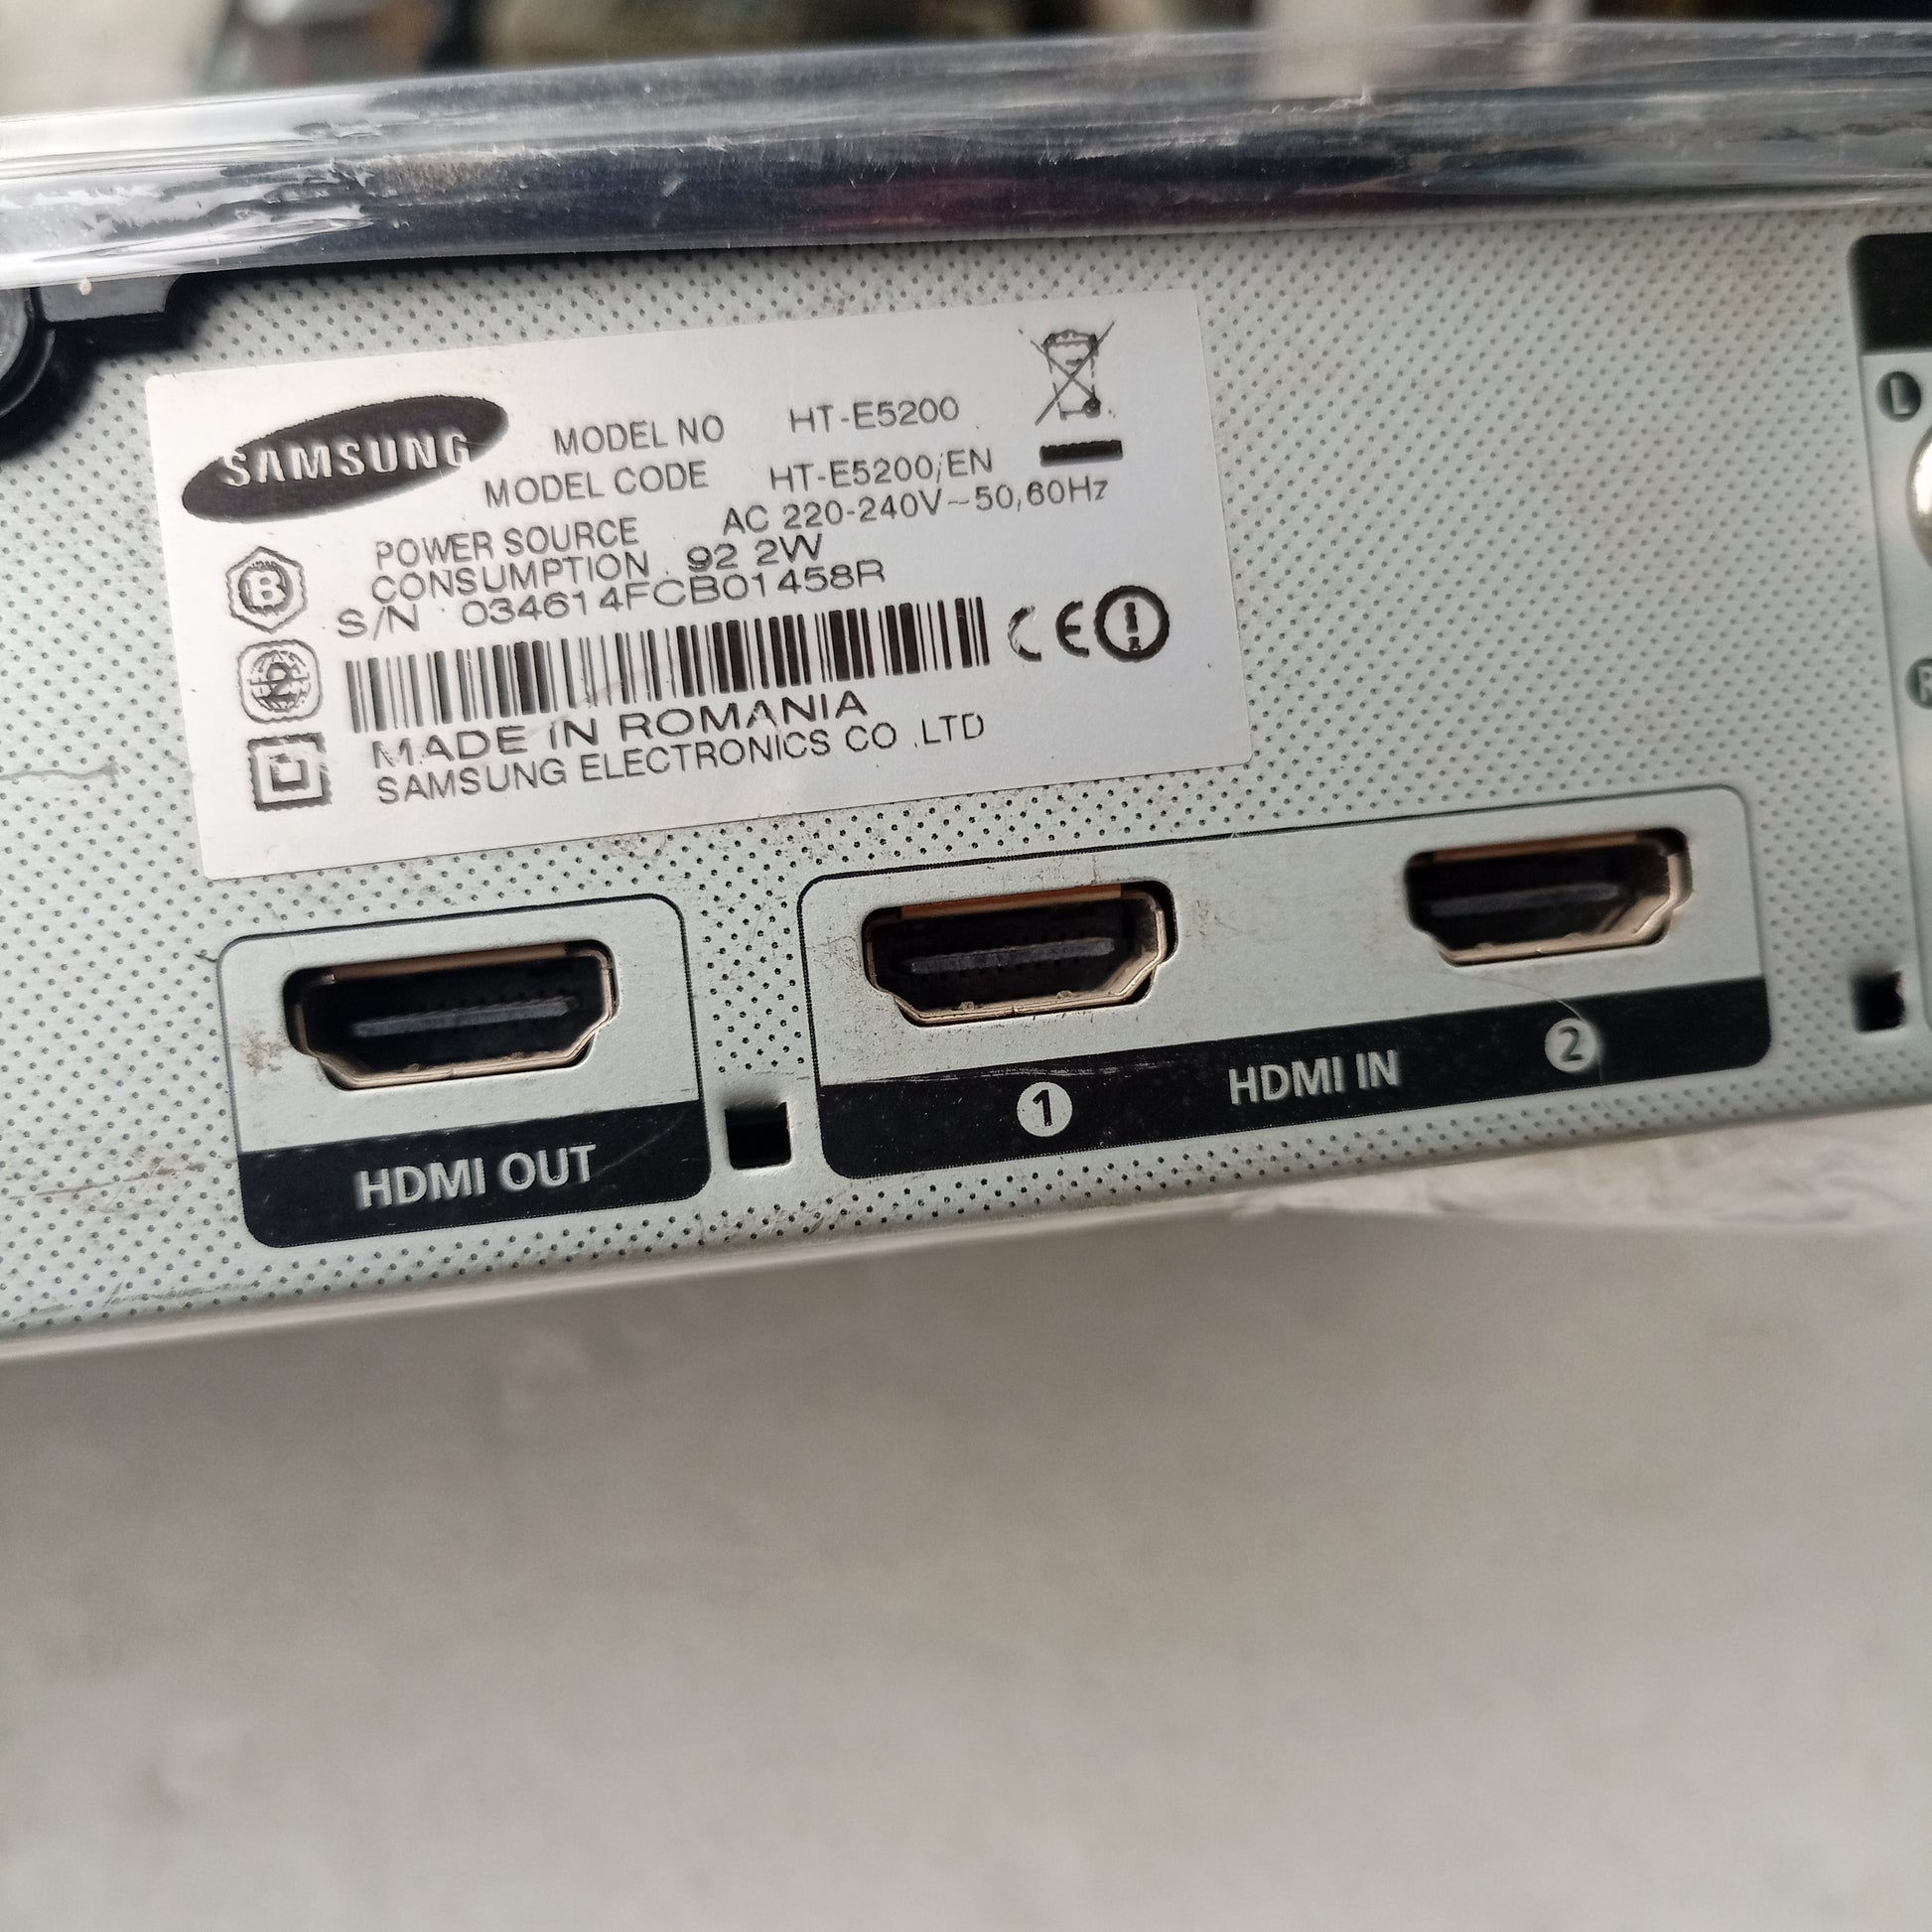 Samsung HT-E5200 2.1Ch 500watts 3D Smart Home Theater Machine Head - HDMI output and input 